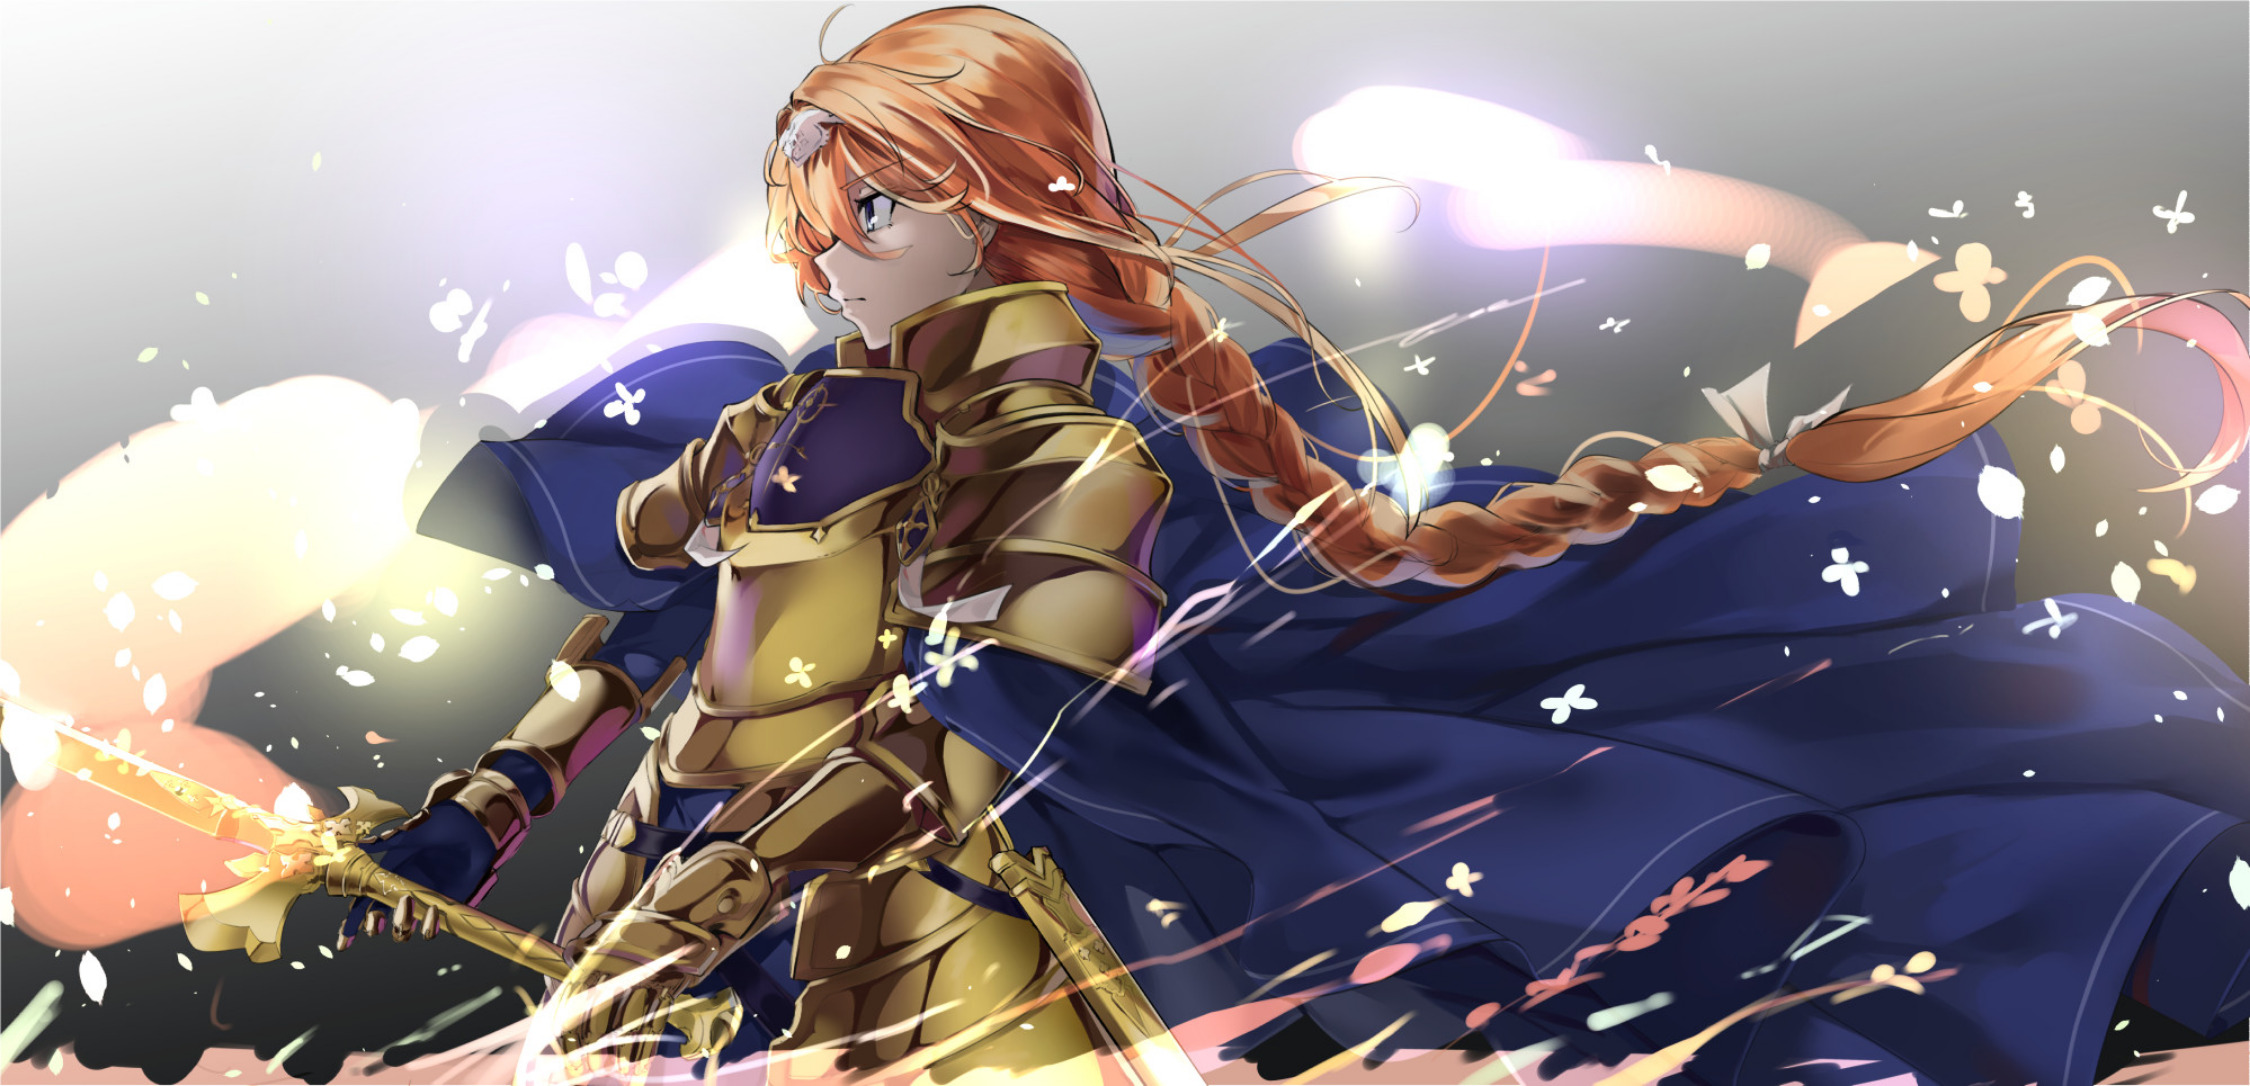 Anime Sword Art Online: Alicization HD Wallpaper | Background Image